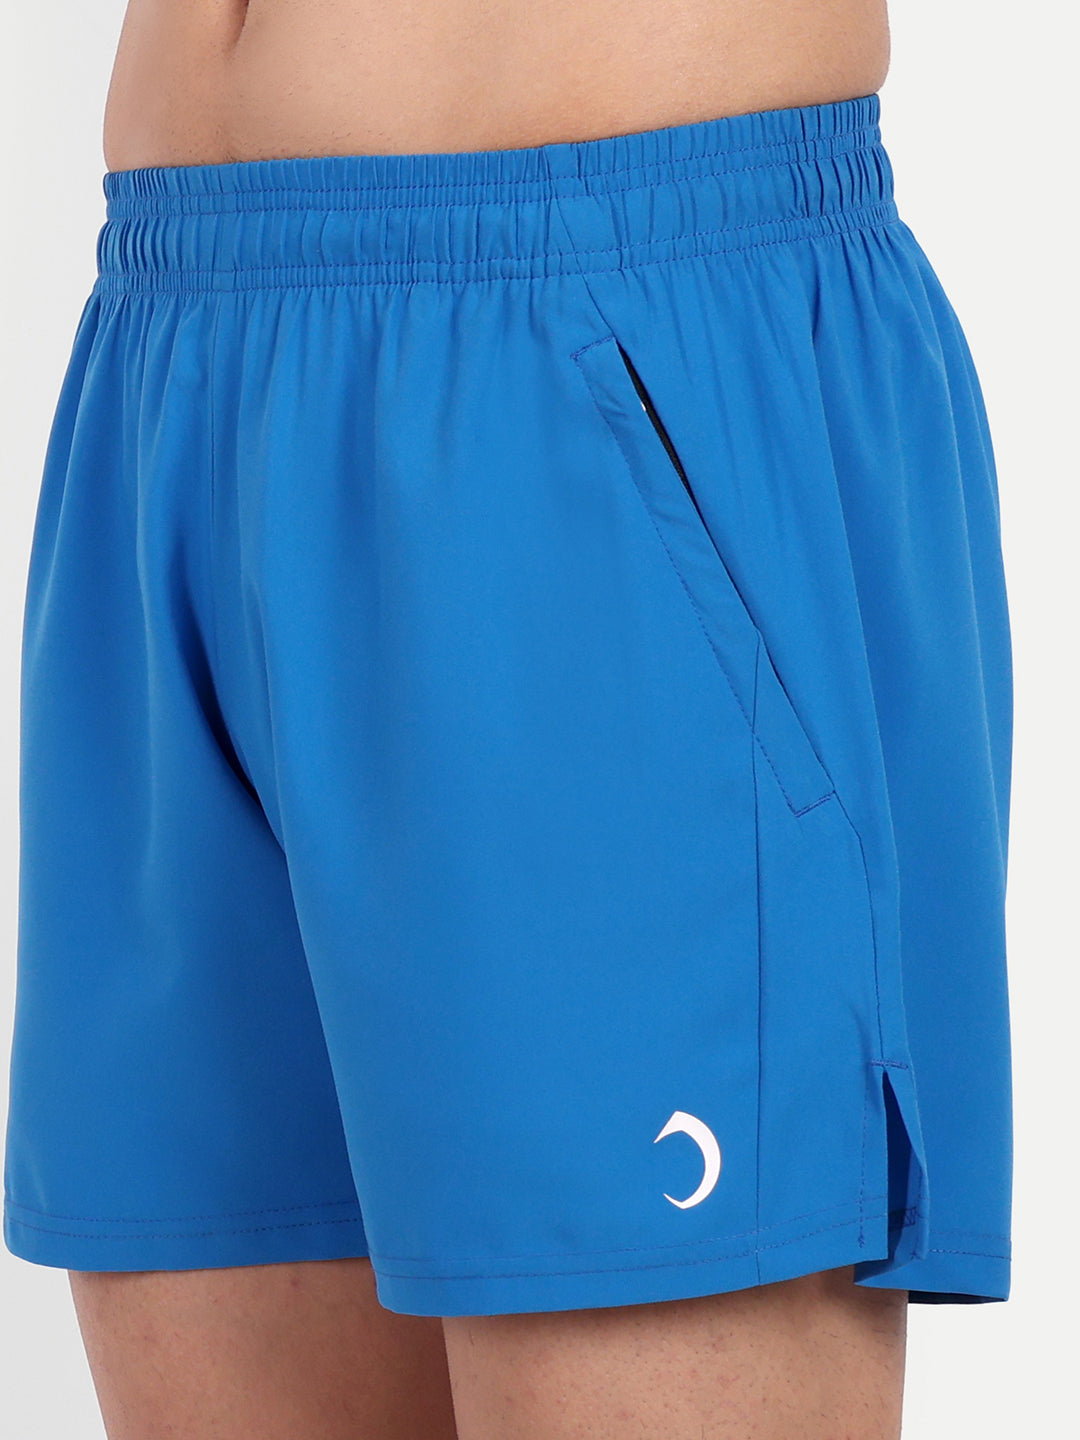 Power 5" Shorts - Scuba Blue